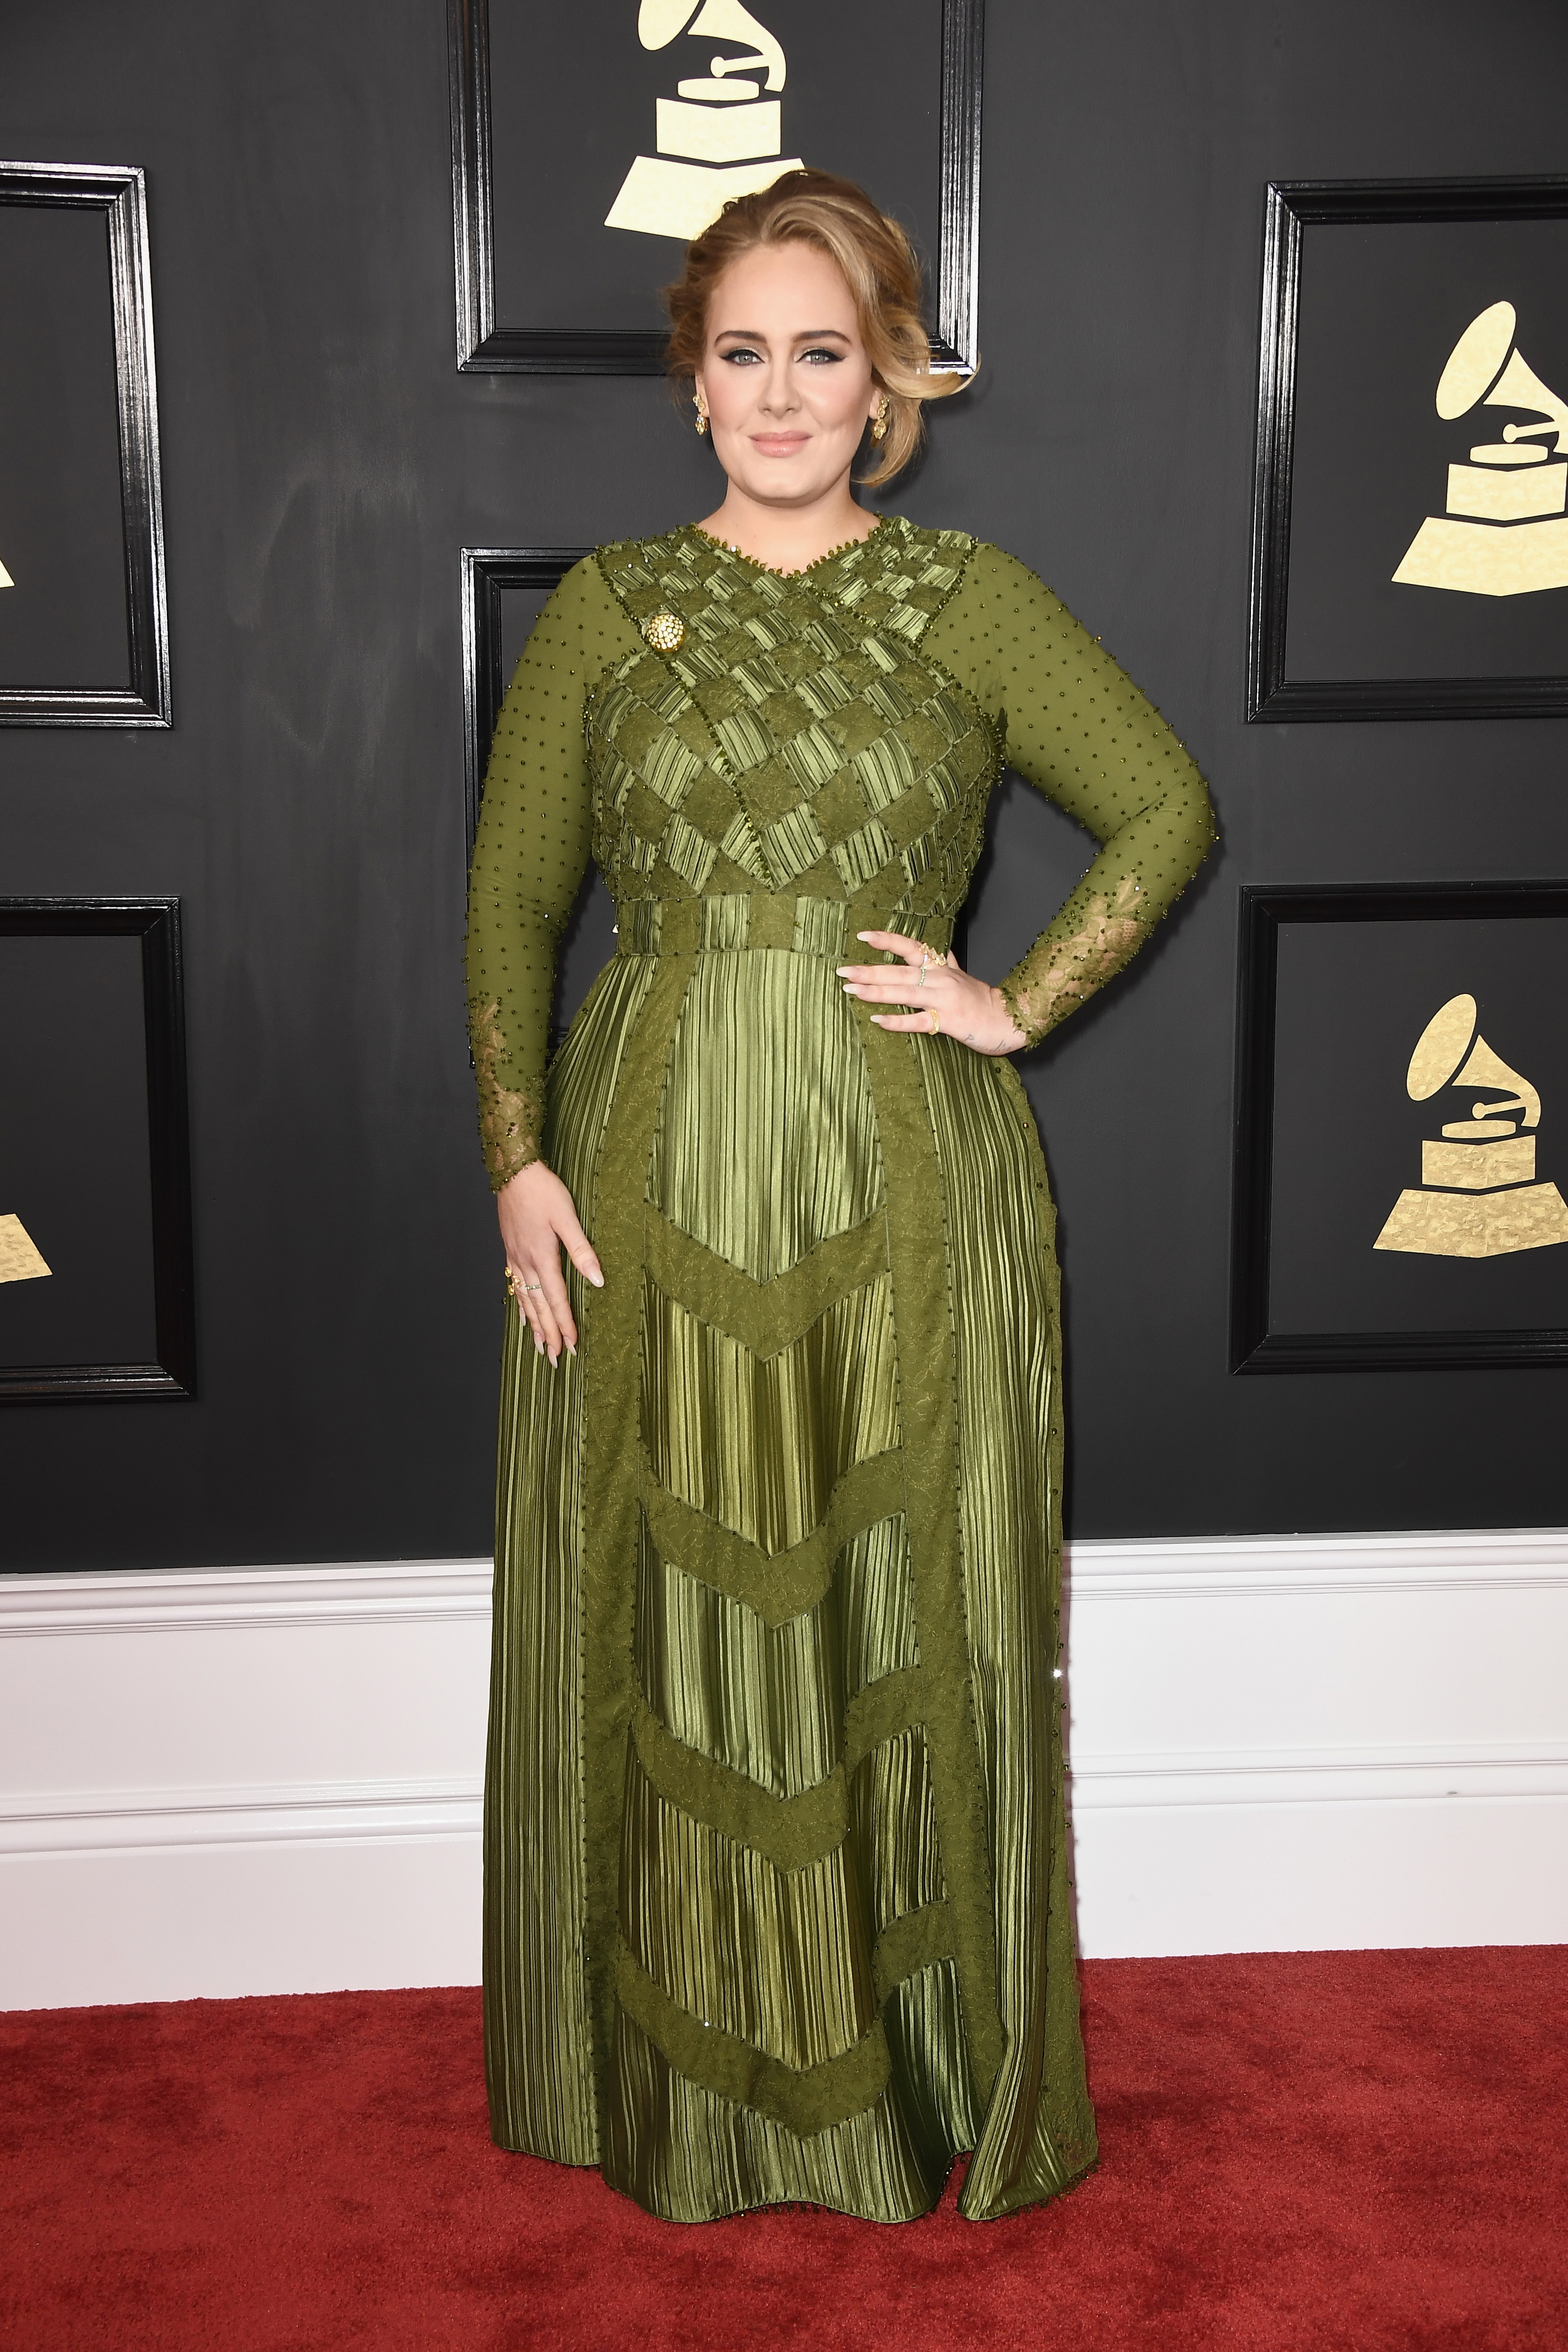 Adele Grammys 2017